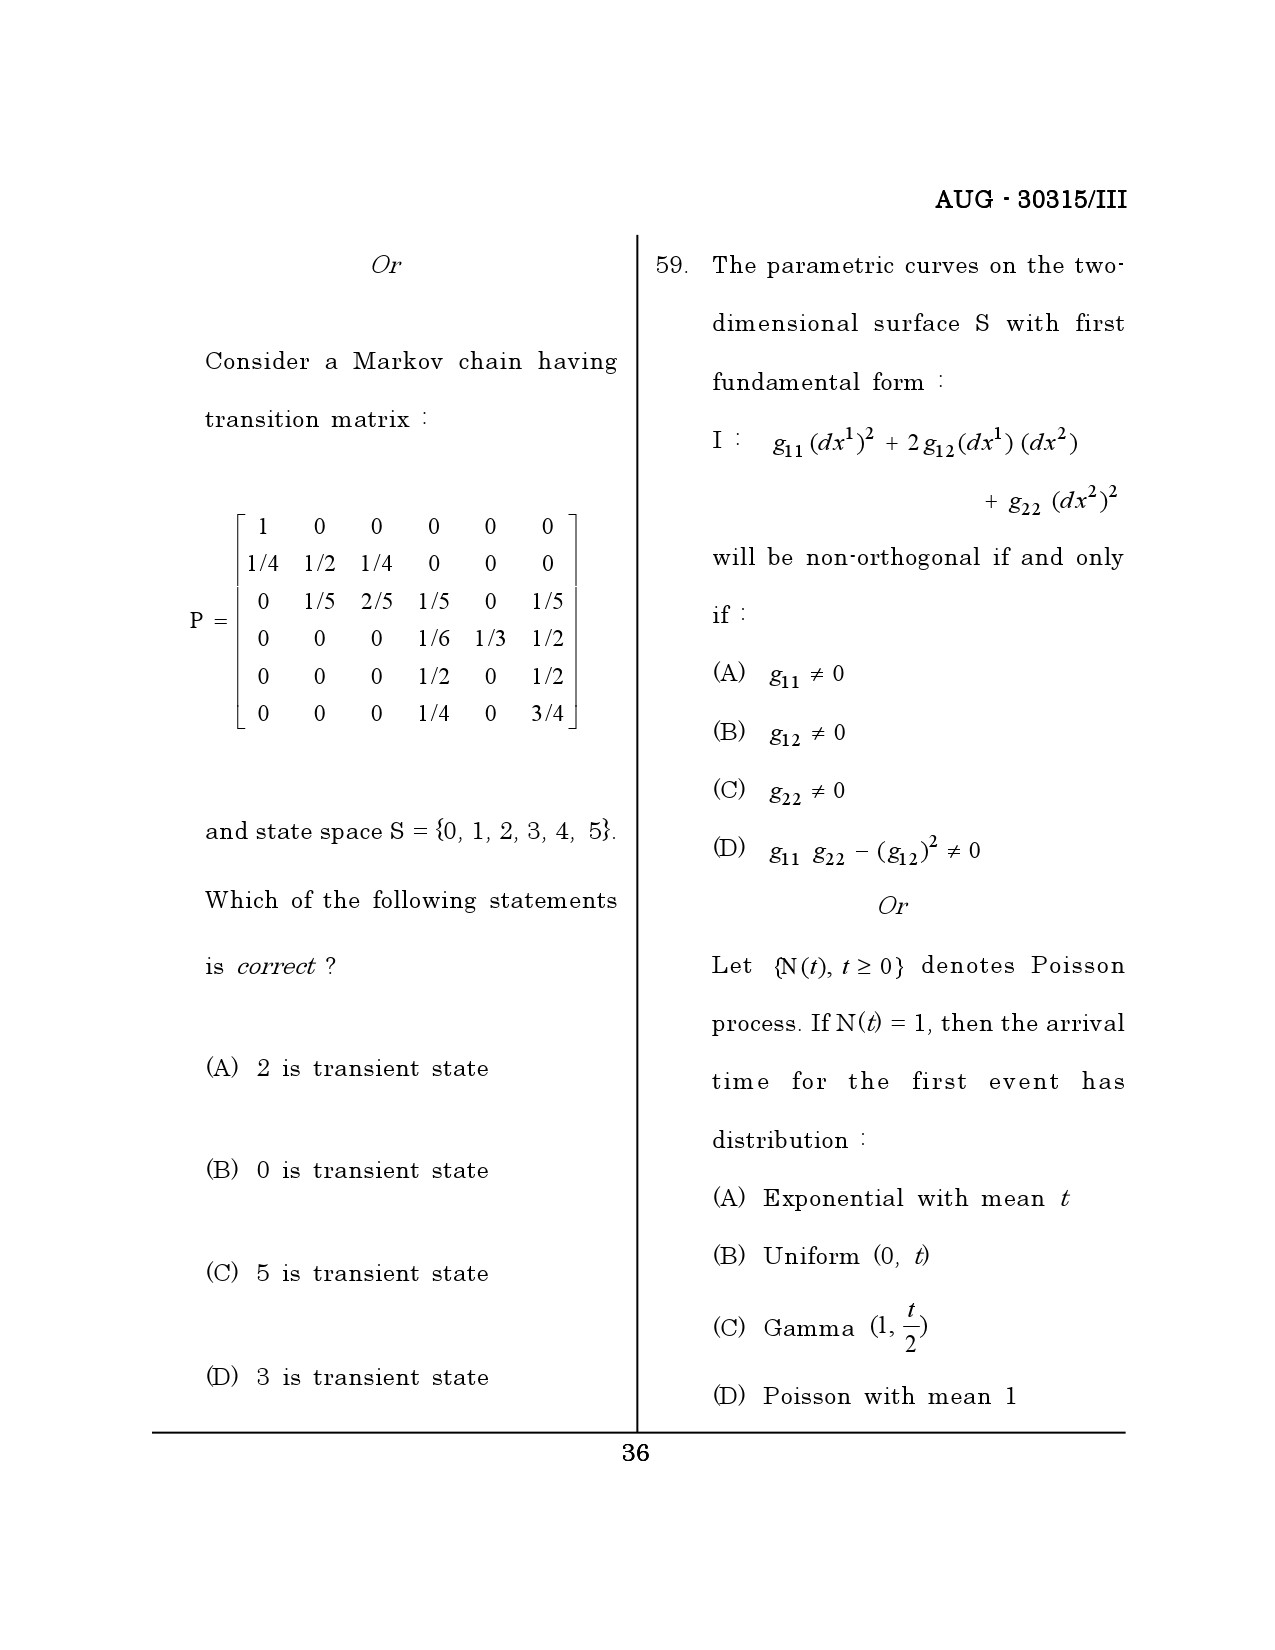 Maharashtra SET Mathematical Sciences Question Paper III August 2015 35